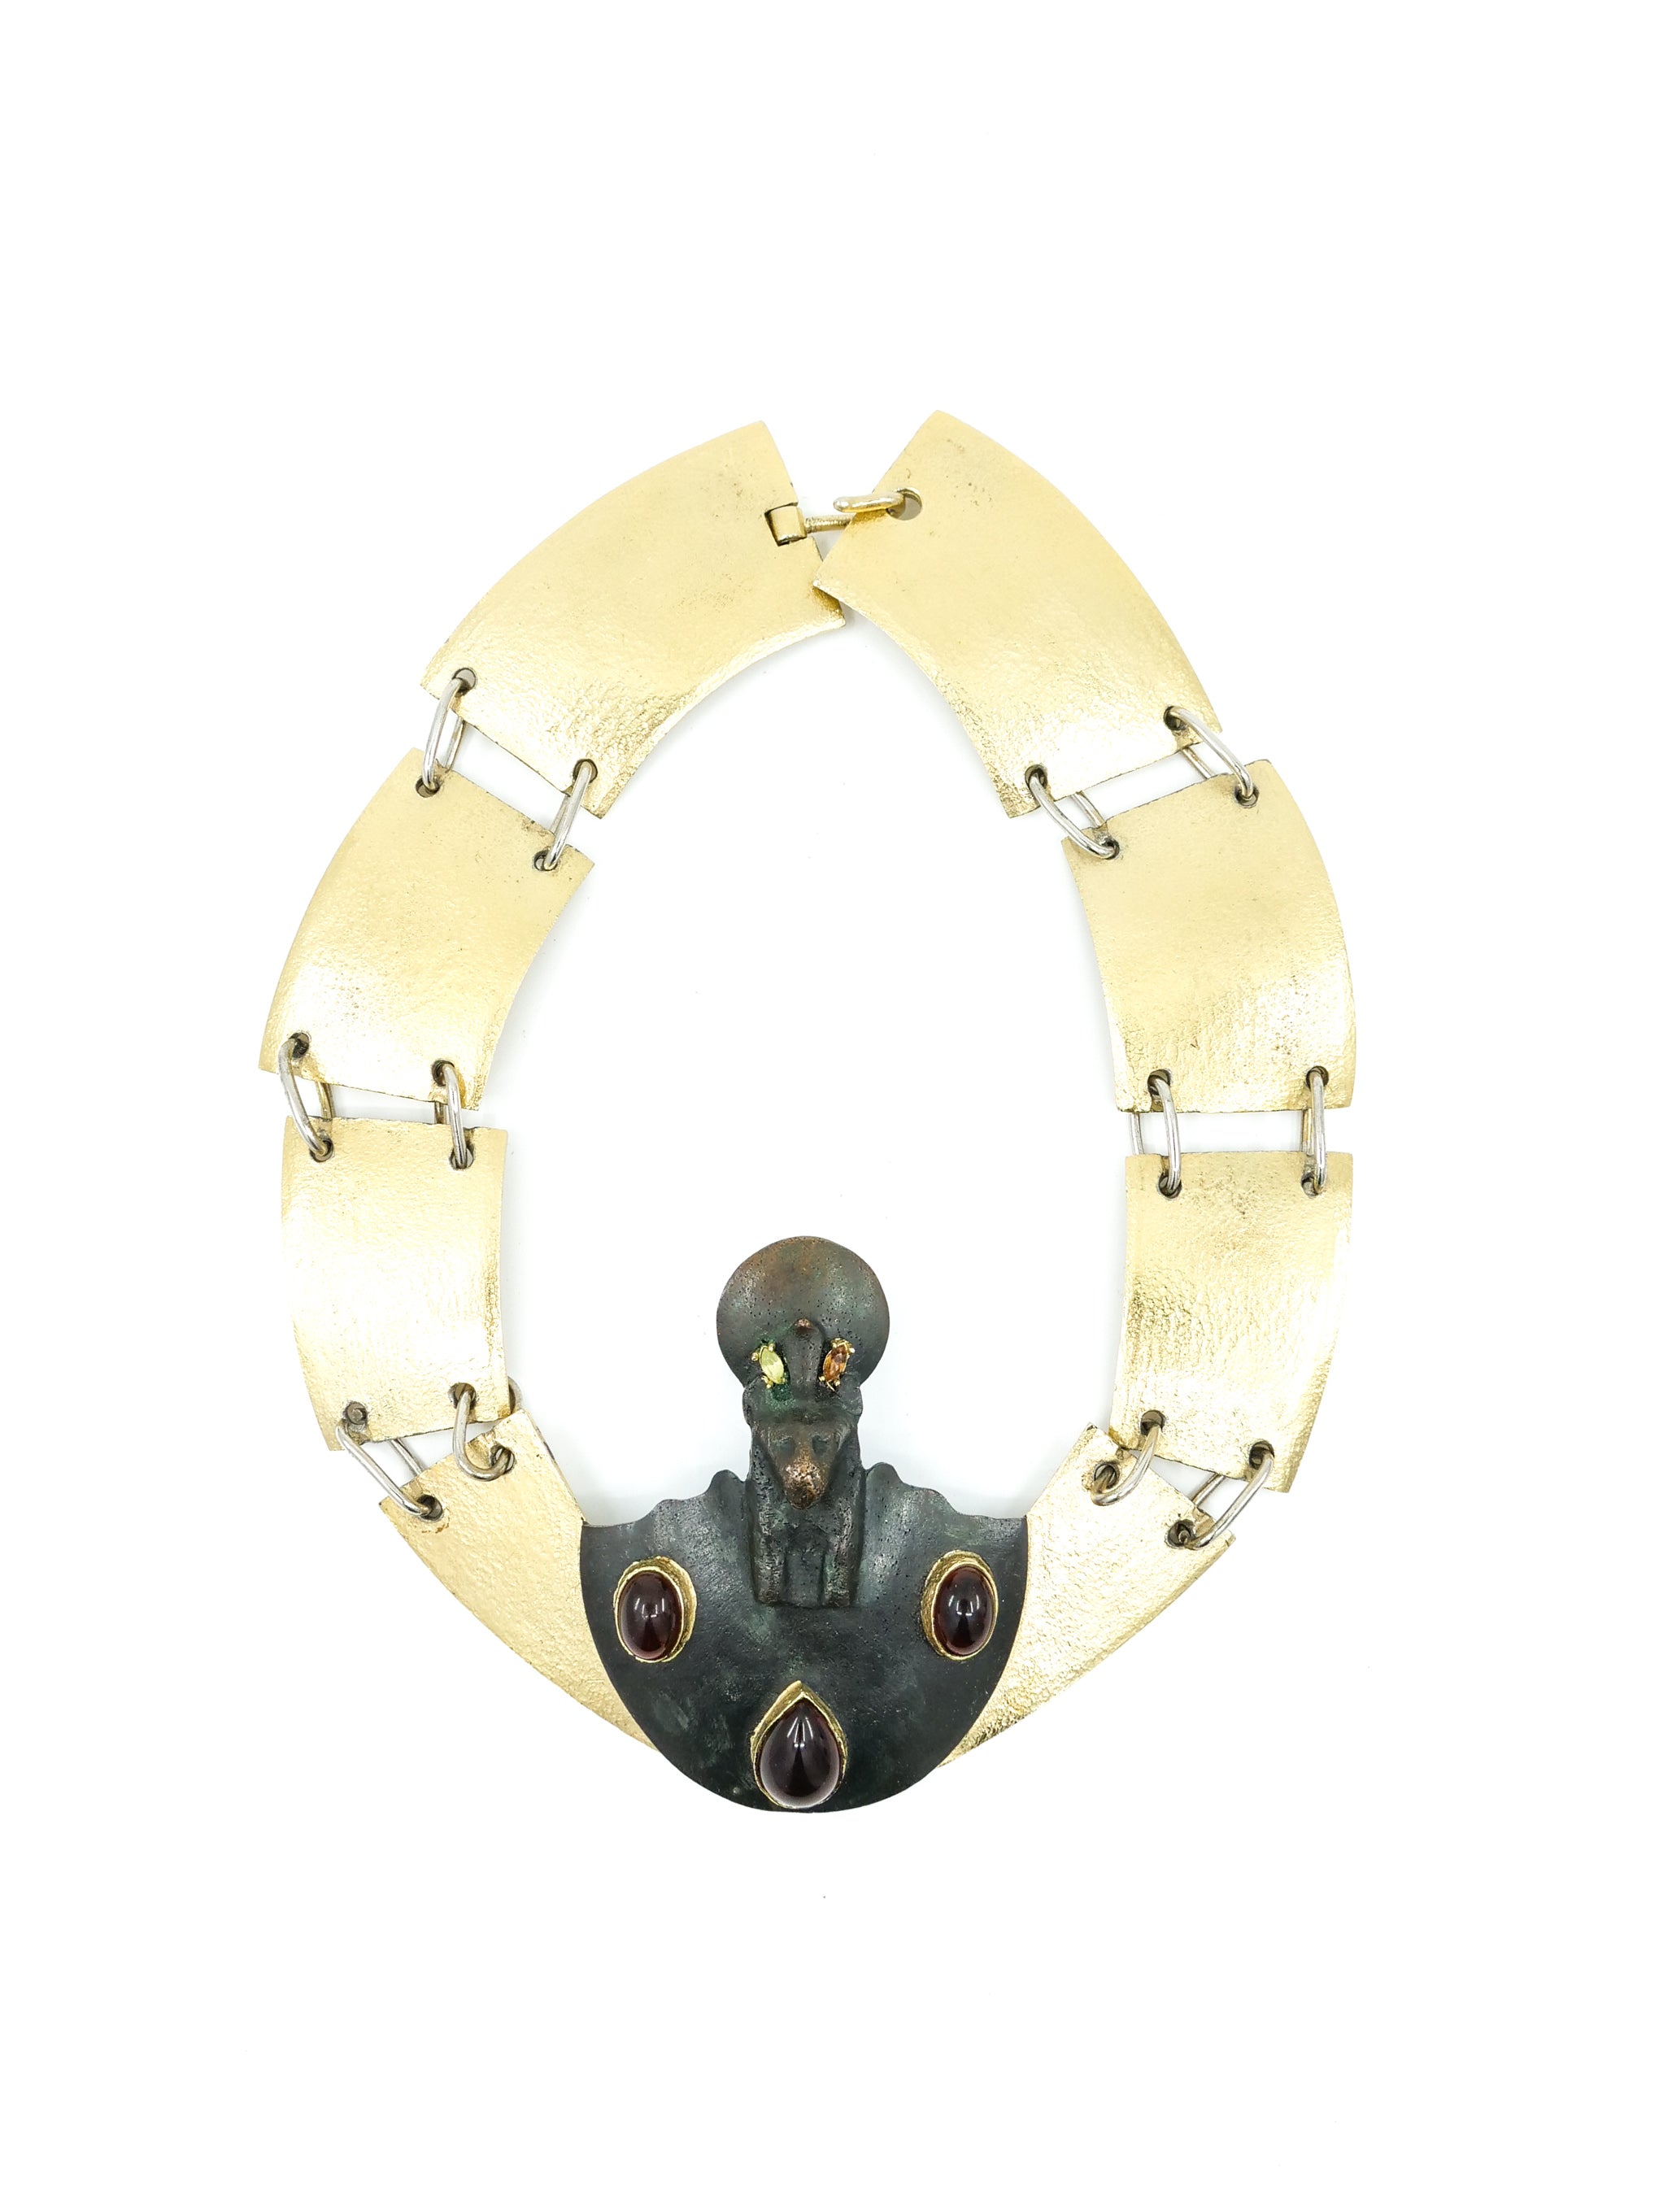 DiY Egyptian Colar Tutorial | Egypt jewelry, Egyptian collar, Egyptian